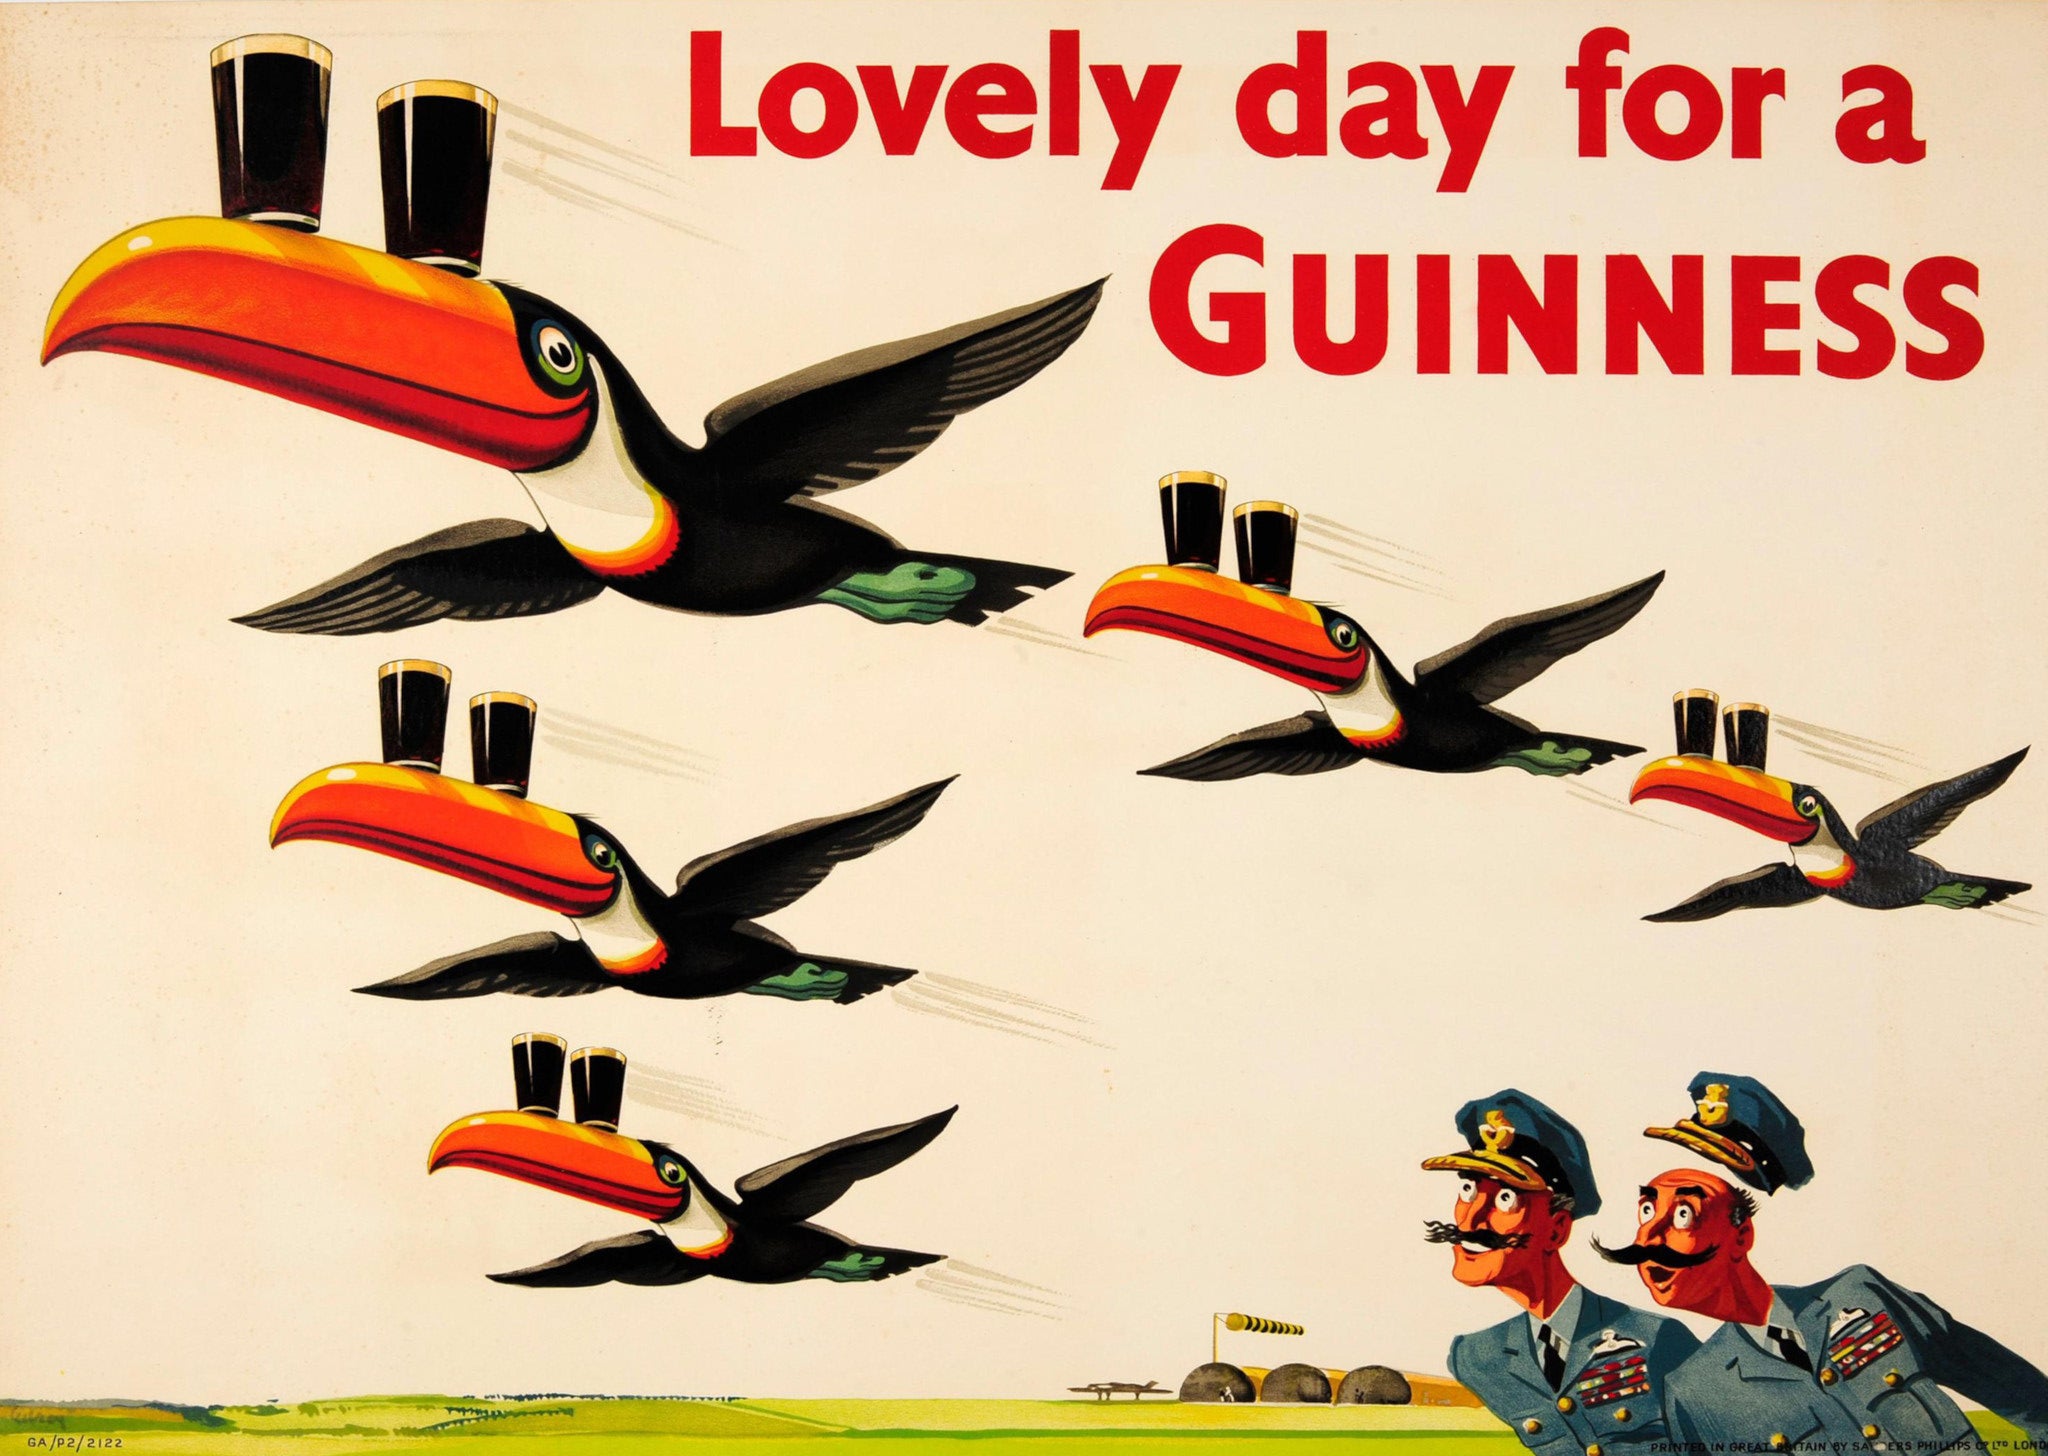 Guinness - Lovely Day for a Guinness (Flying Toucans) - A4 Mini Print/Poster